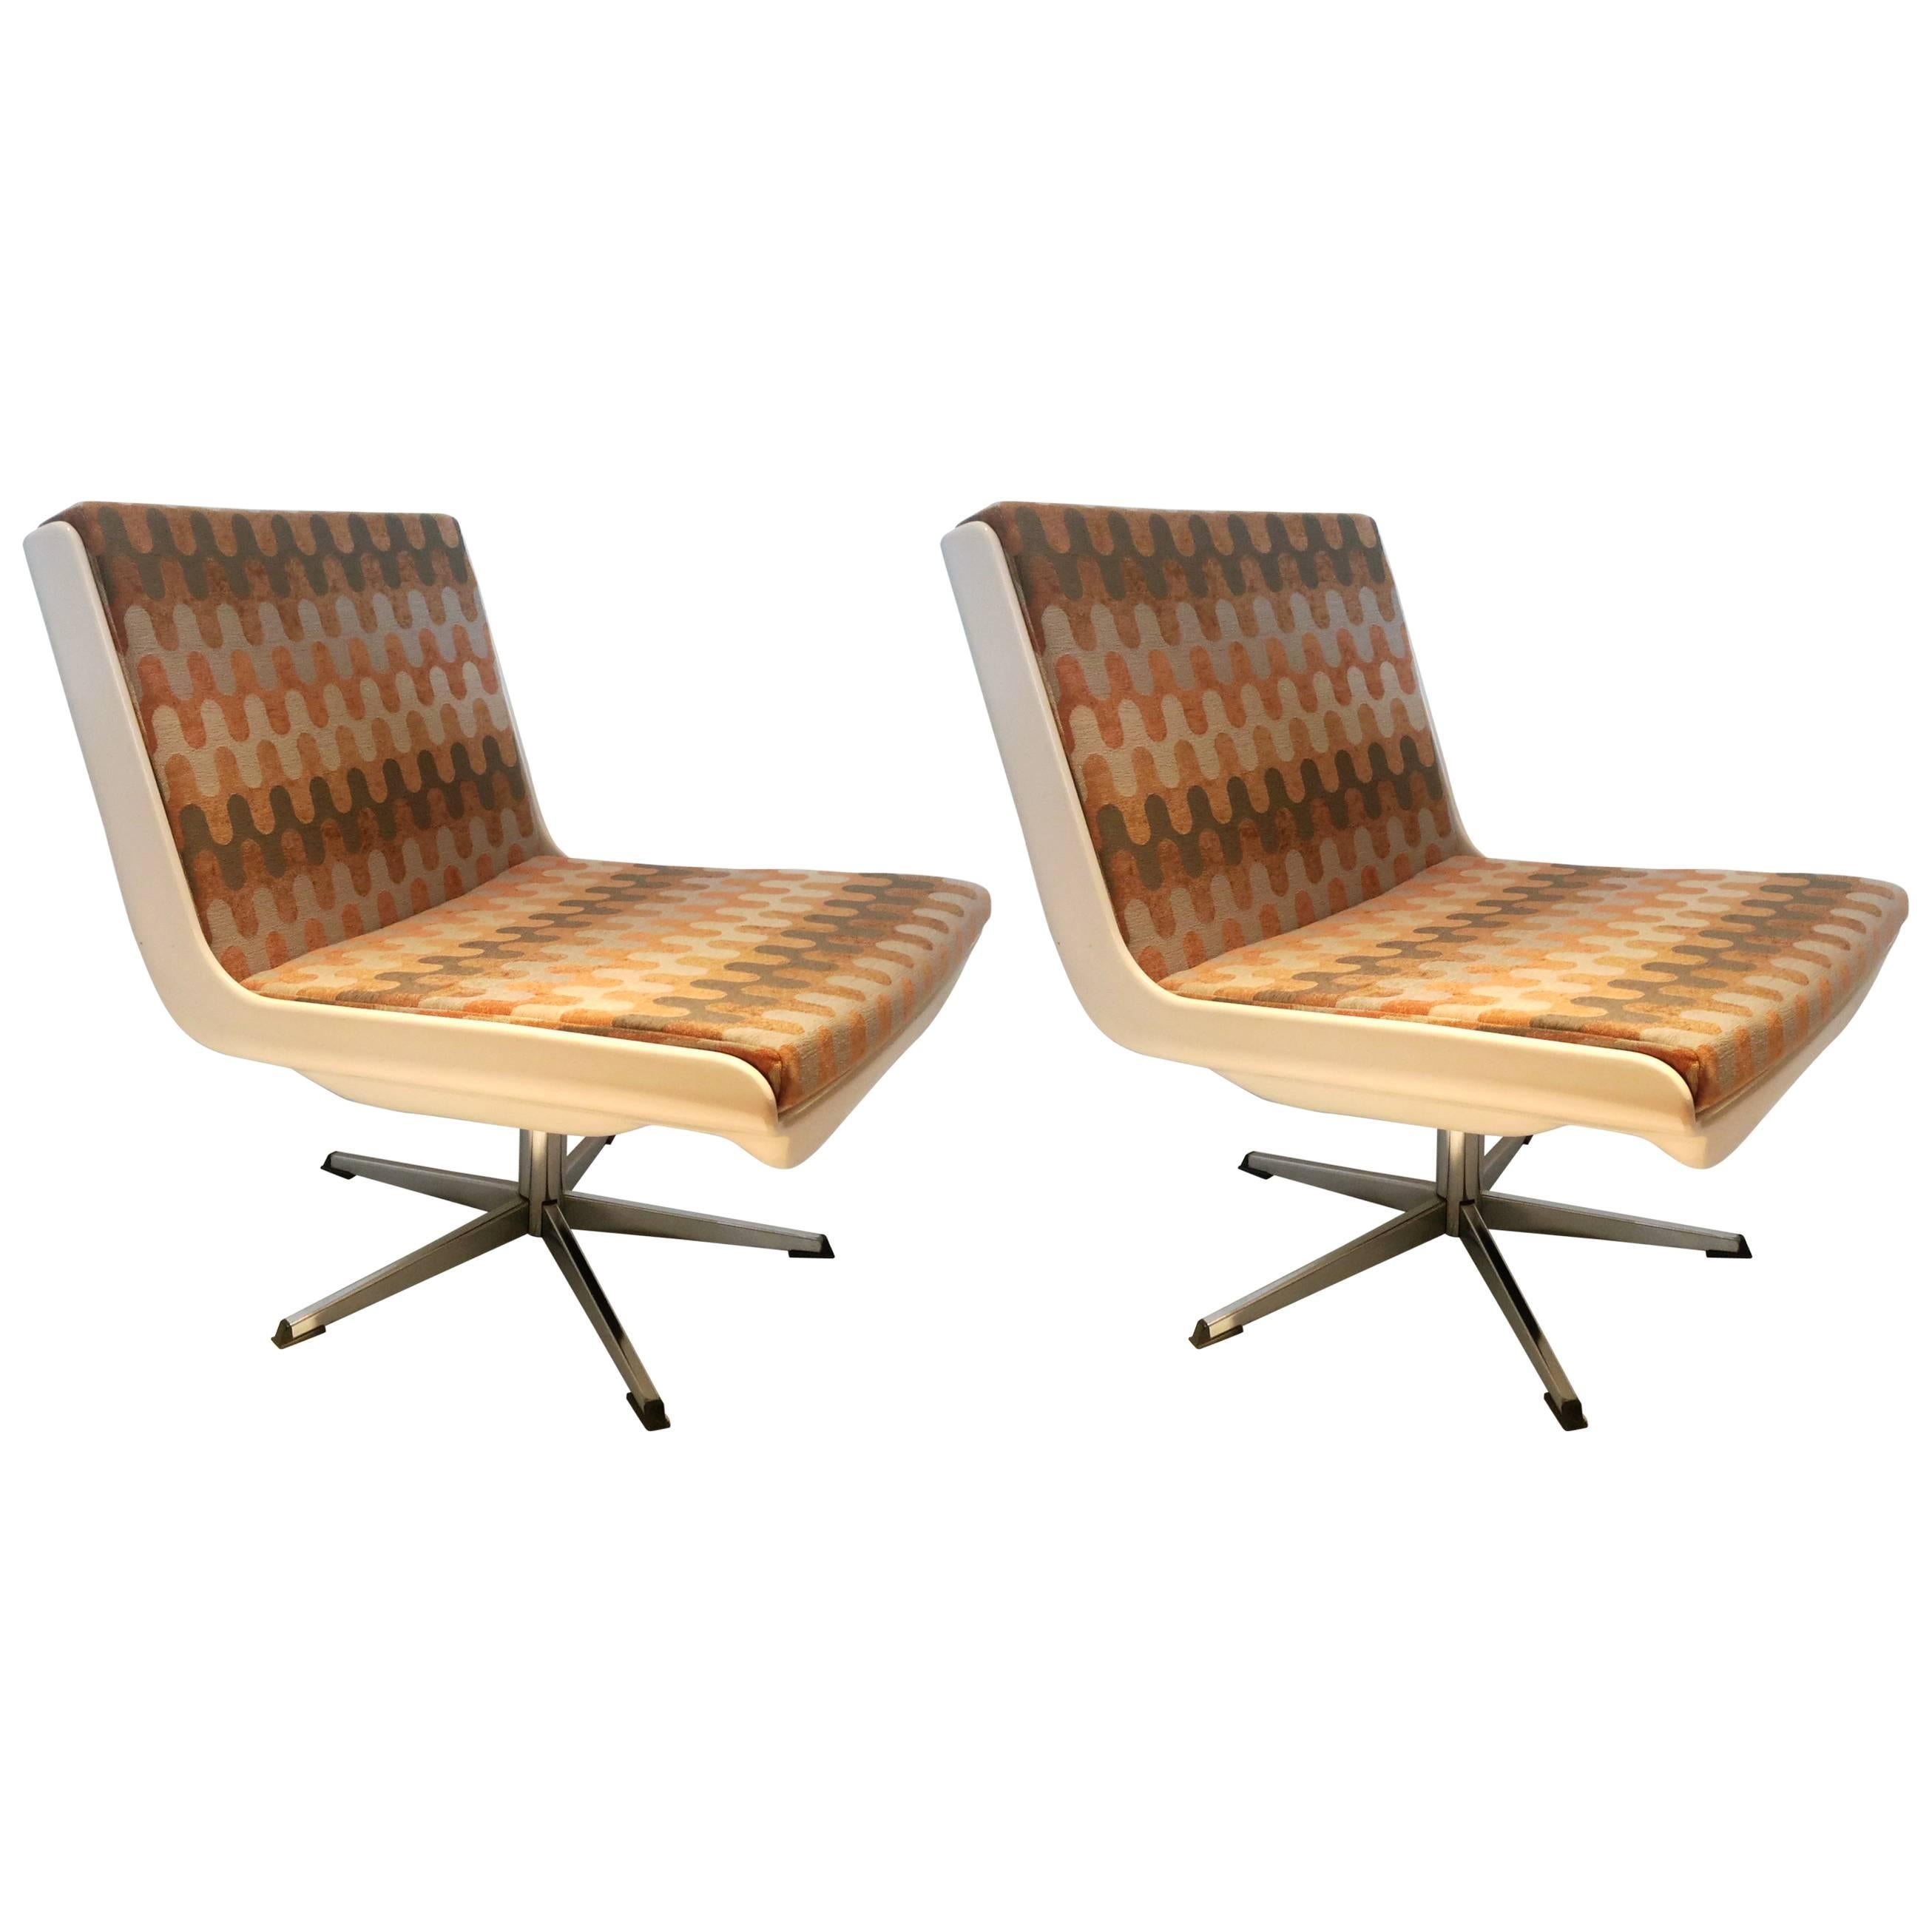 1960s Scandinavian Modern Pair of Slipper Chairs with Swivel Chrome Base